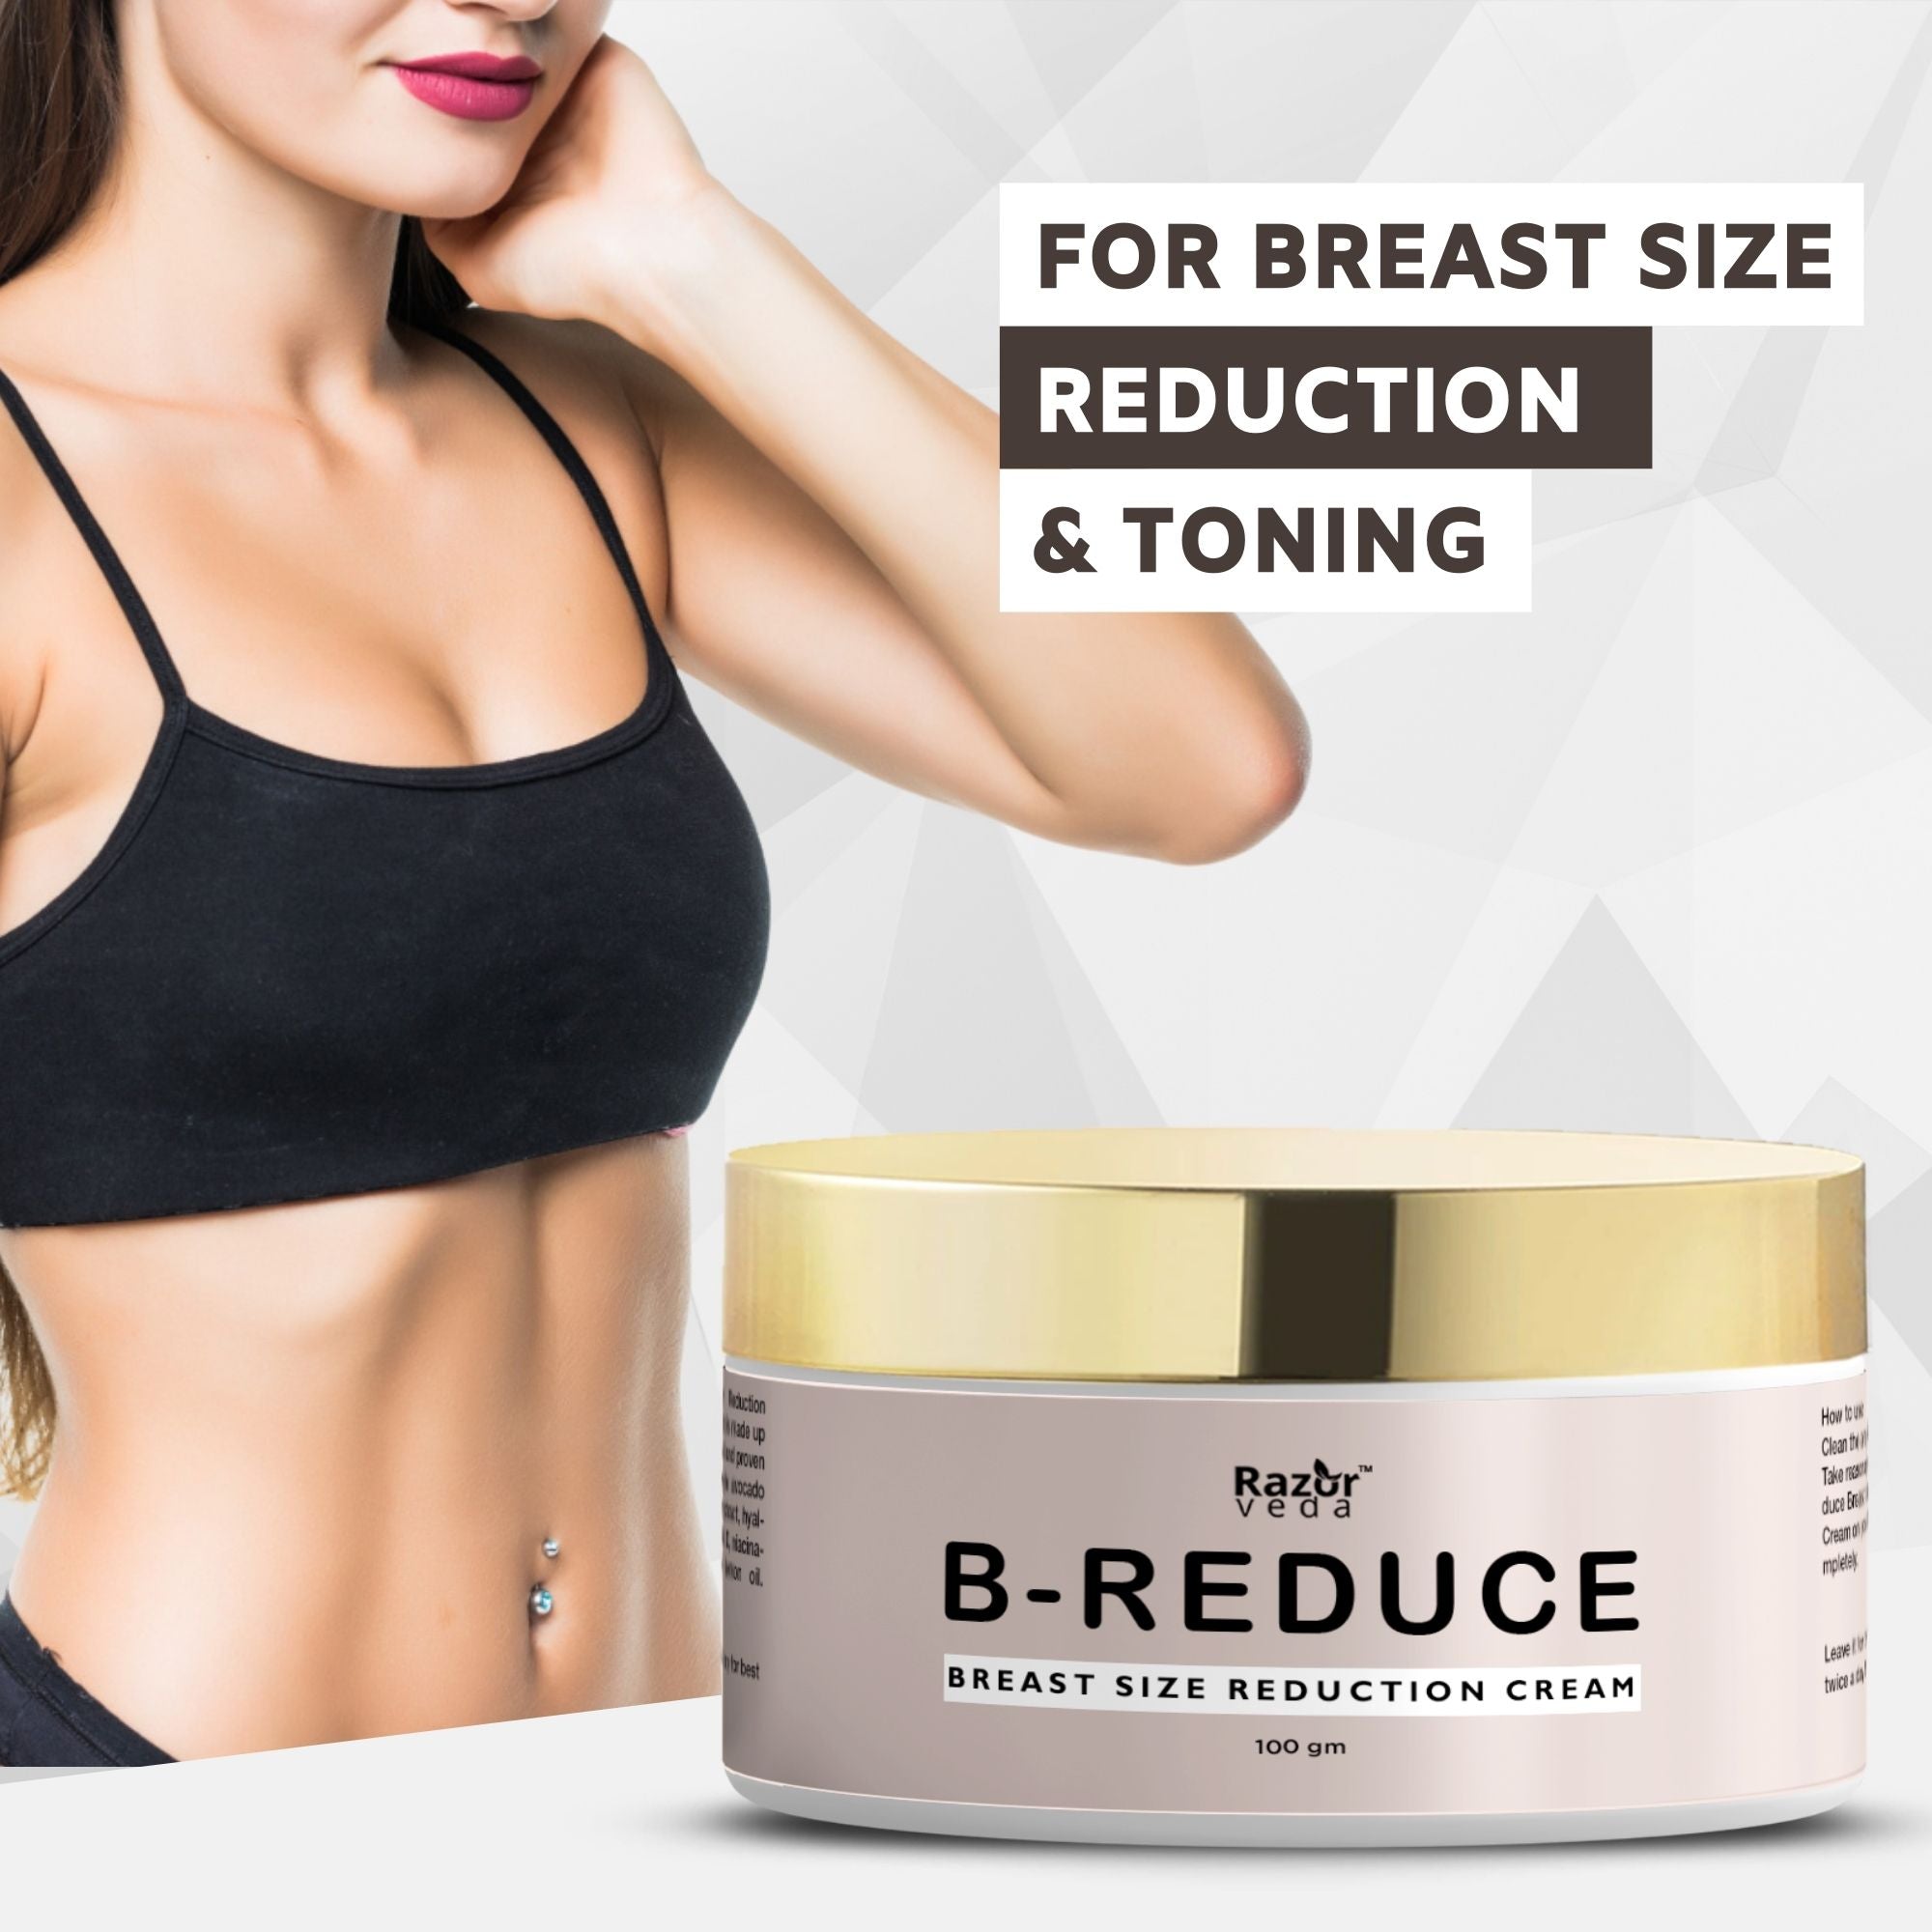 B-REDUCE Breast Size Reduction Cream Razorveda